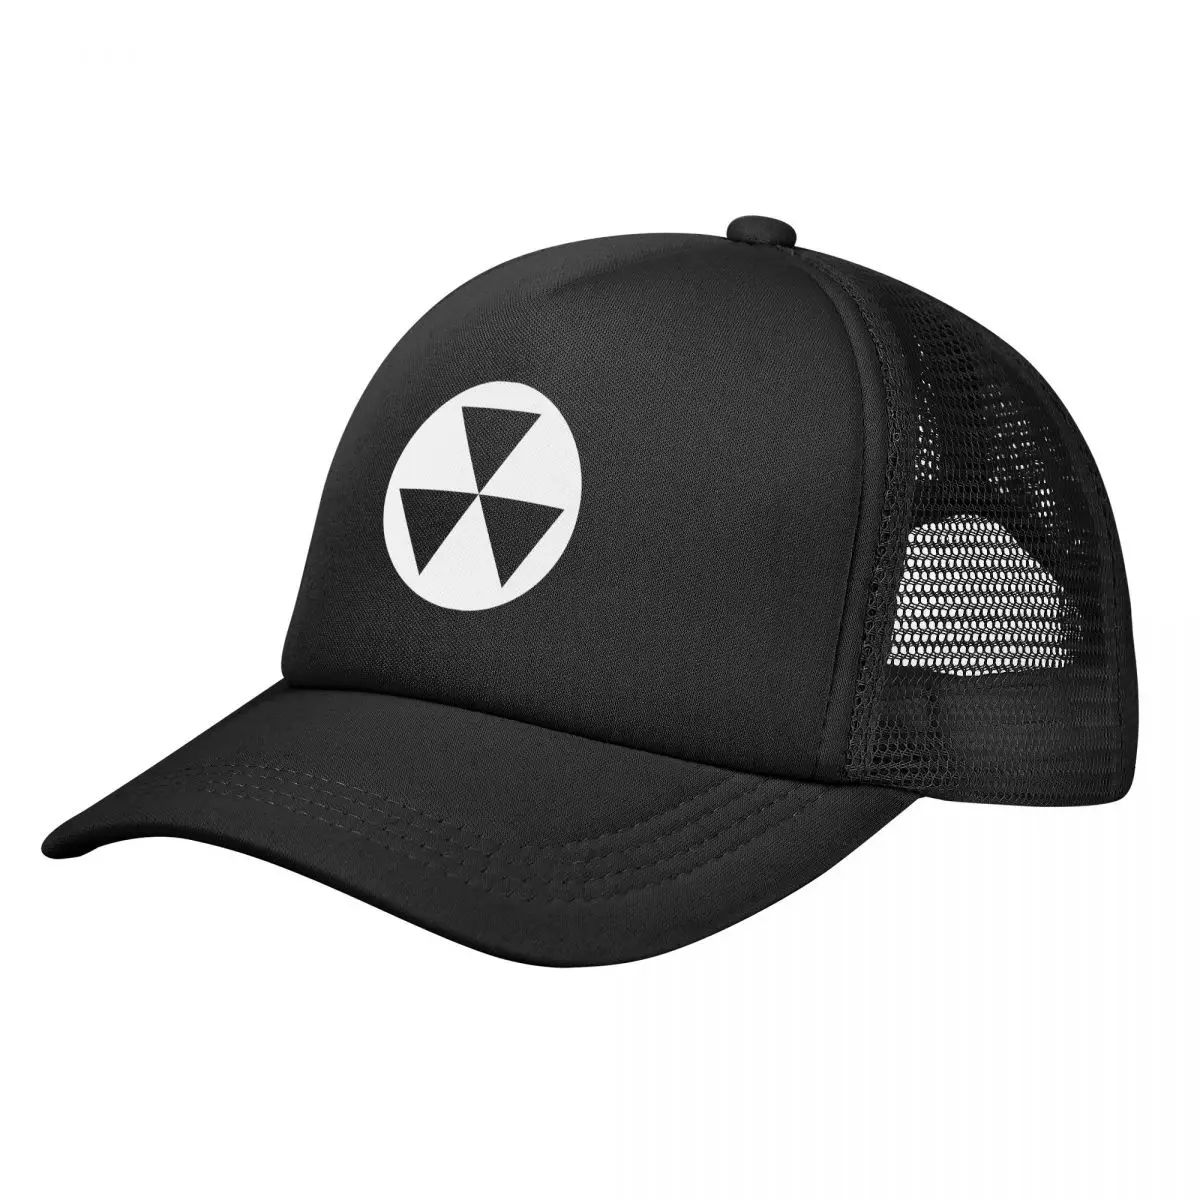 

Fallout Shelter Stretchy Trucker Hat Mesh Baseball Cap Adjustable Snapback Closure Hats for Men Women Comfortable Breathable